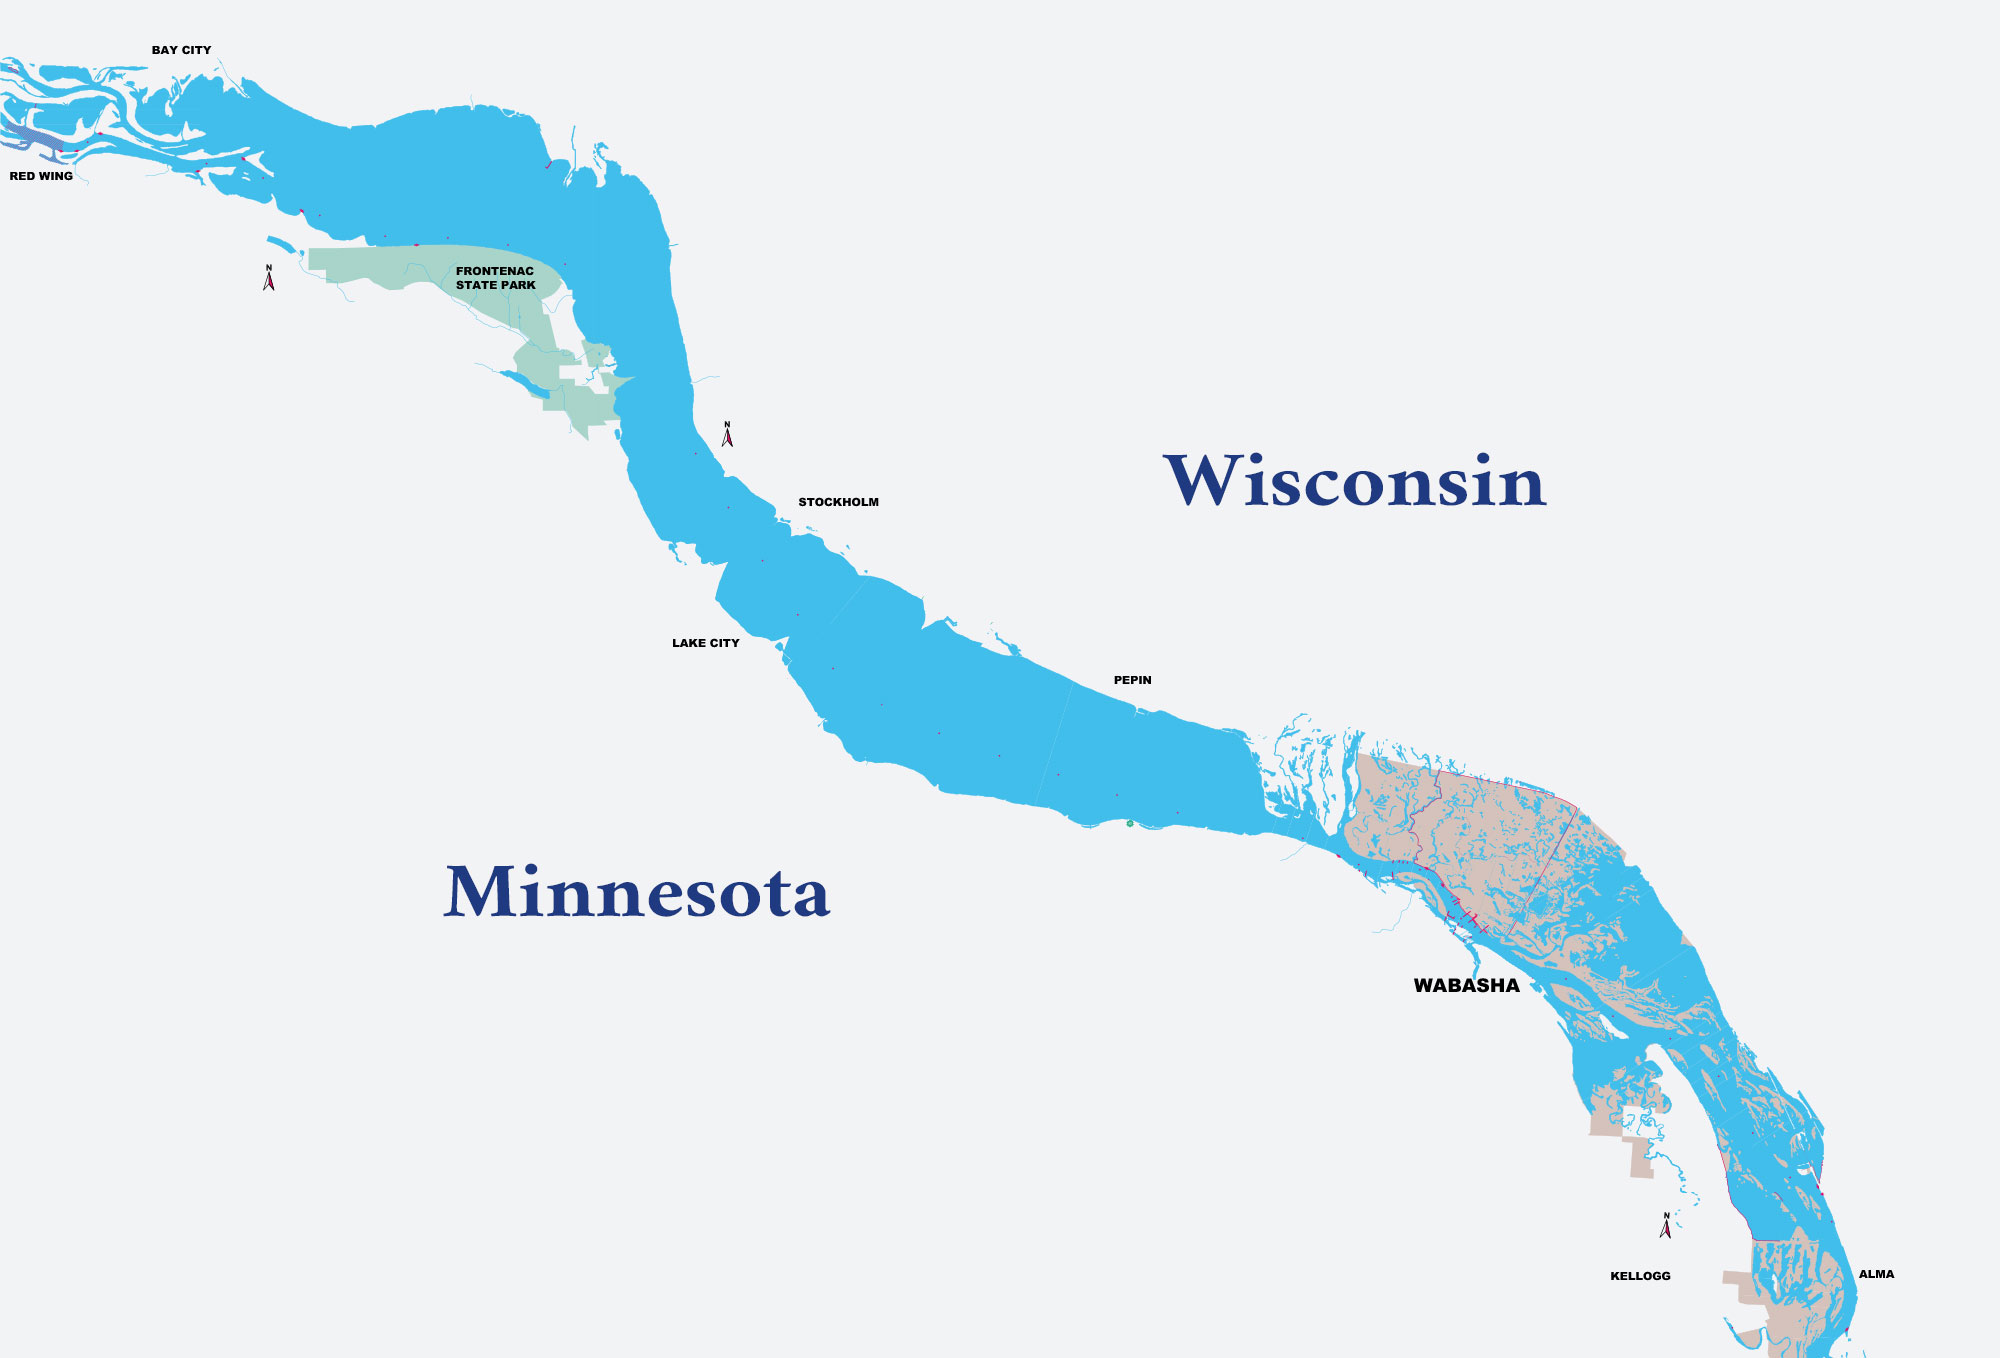 Mississippi River Map - Wisconsin/Minnesota